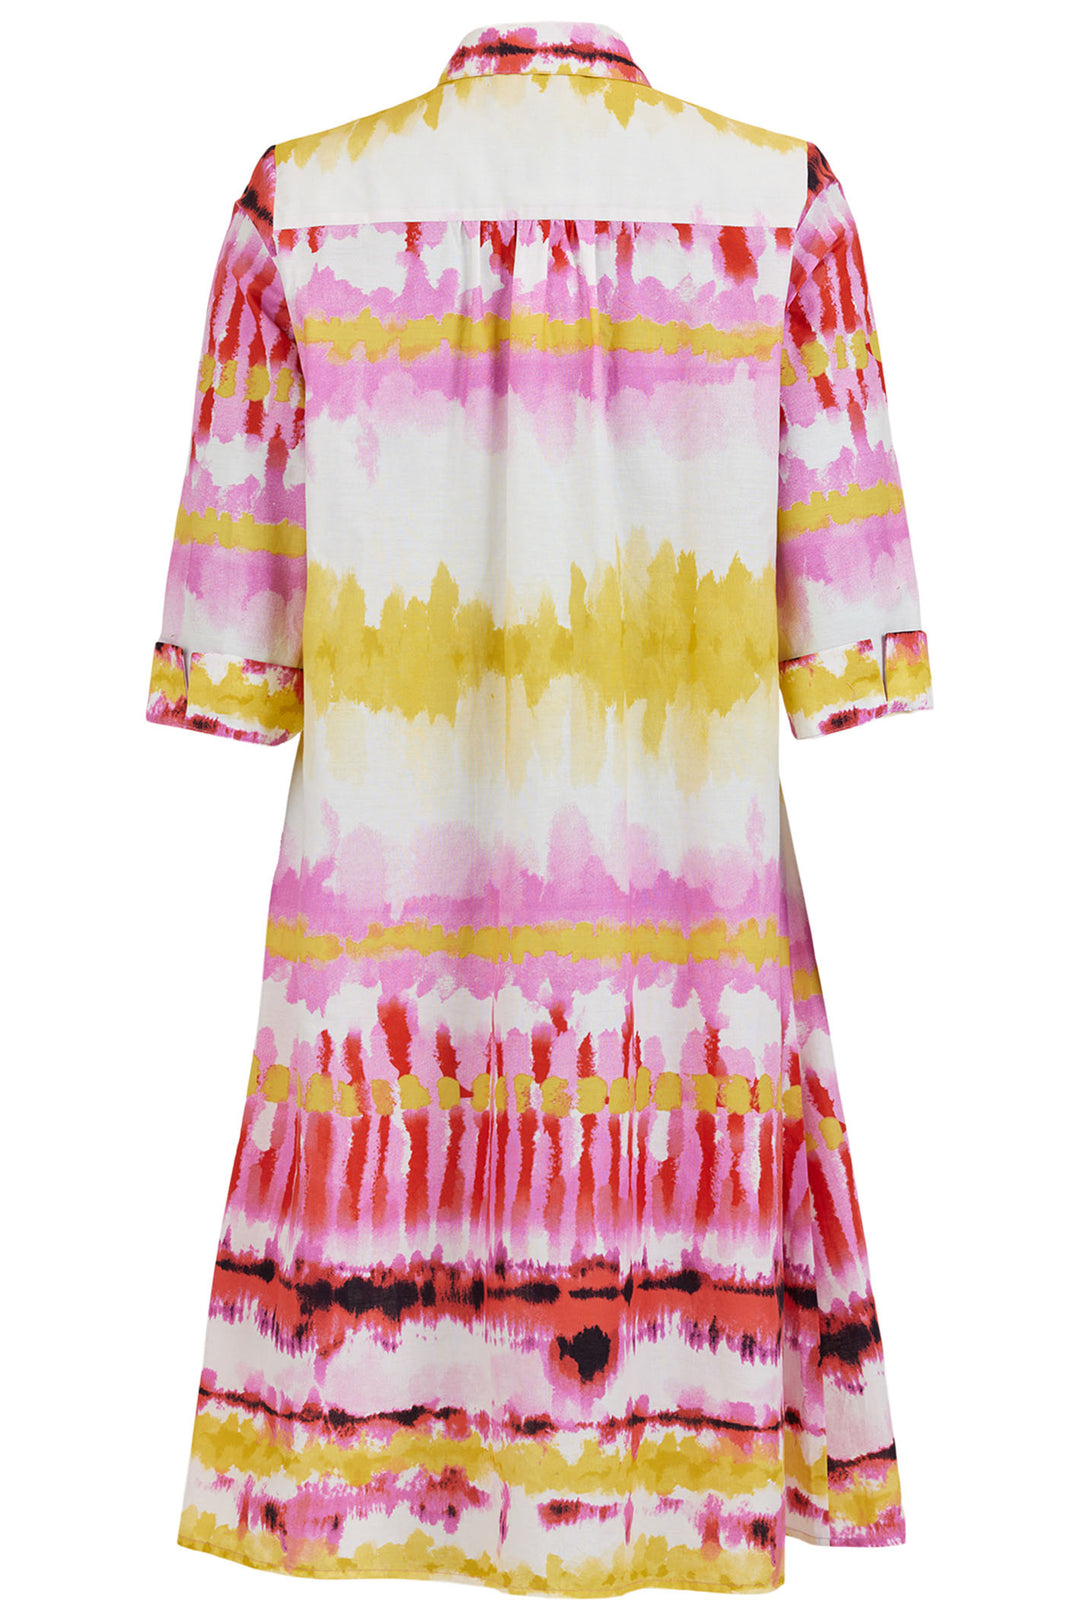 Noen 88486 Pink & Yellow Tie Dye A-Line Midi Dress - Experience Boutique